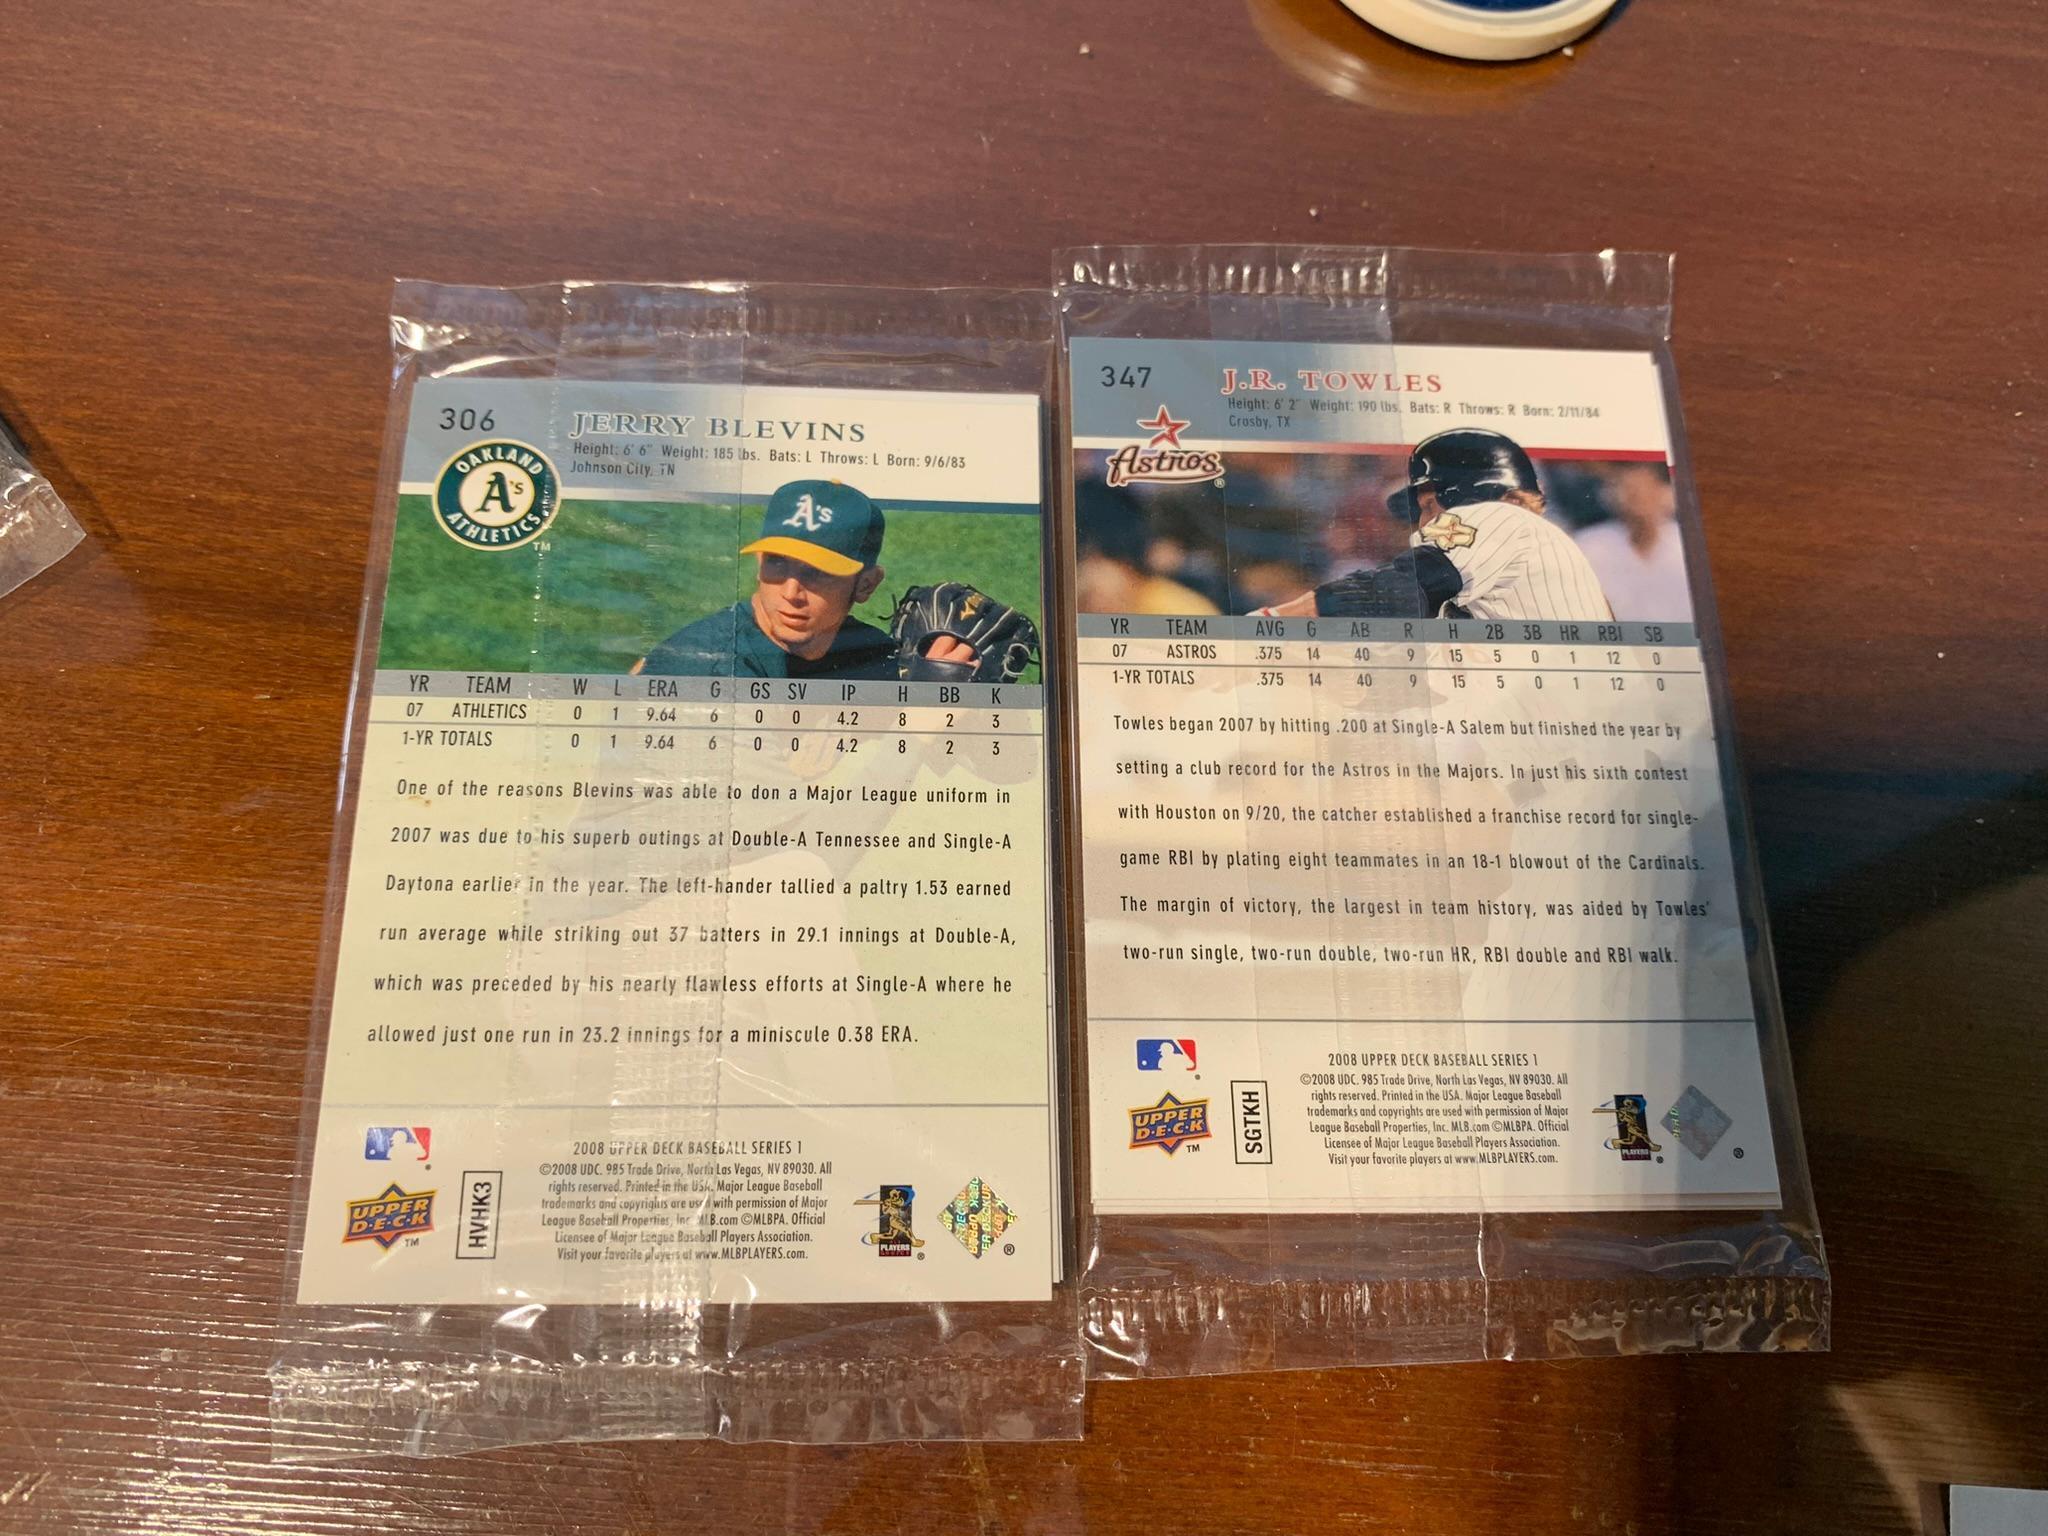 Group of Collectable Baseball Memorabilia - Cards, Tickets & More